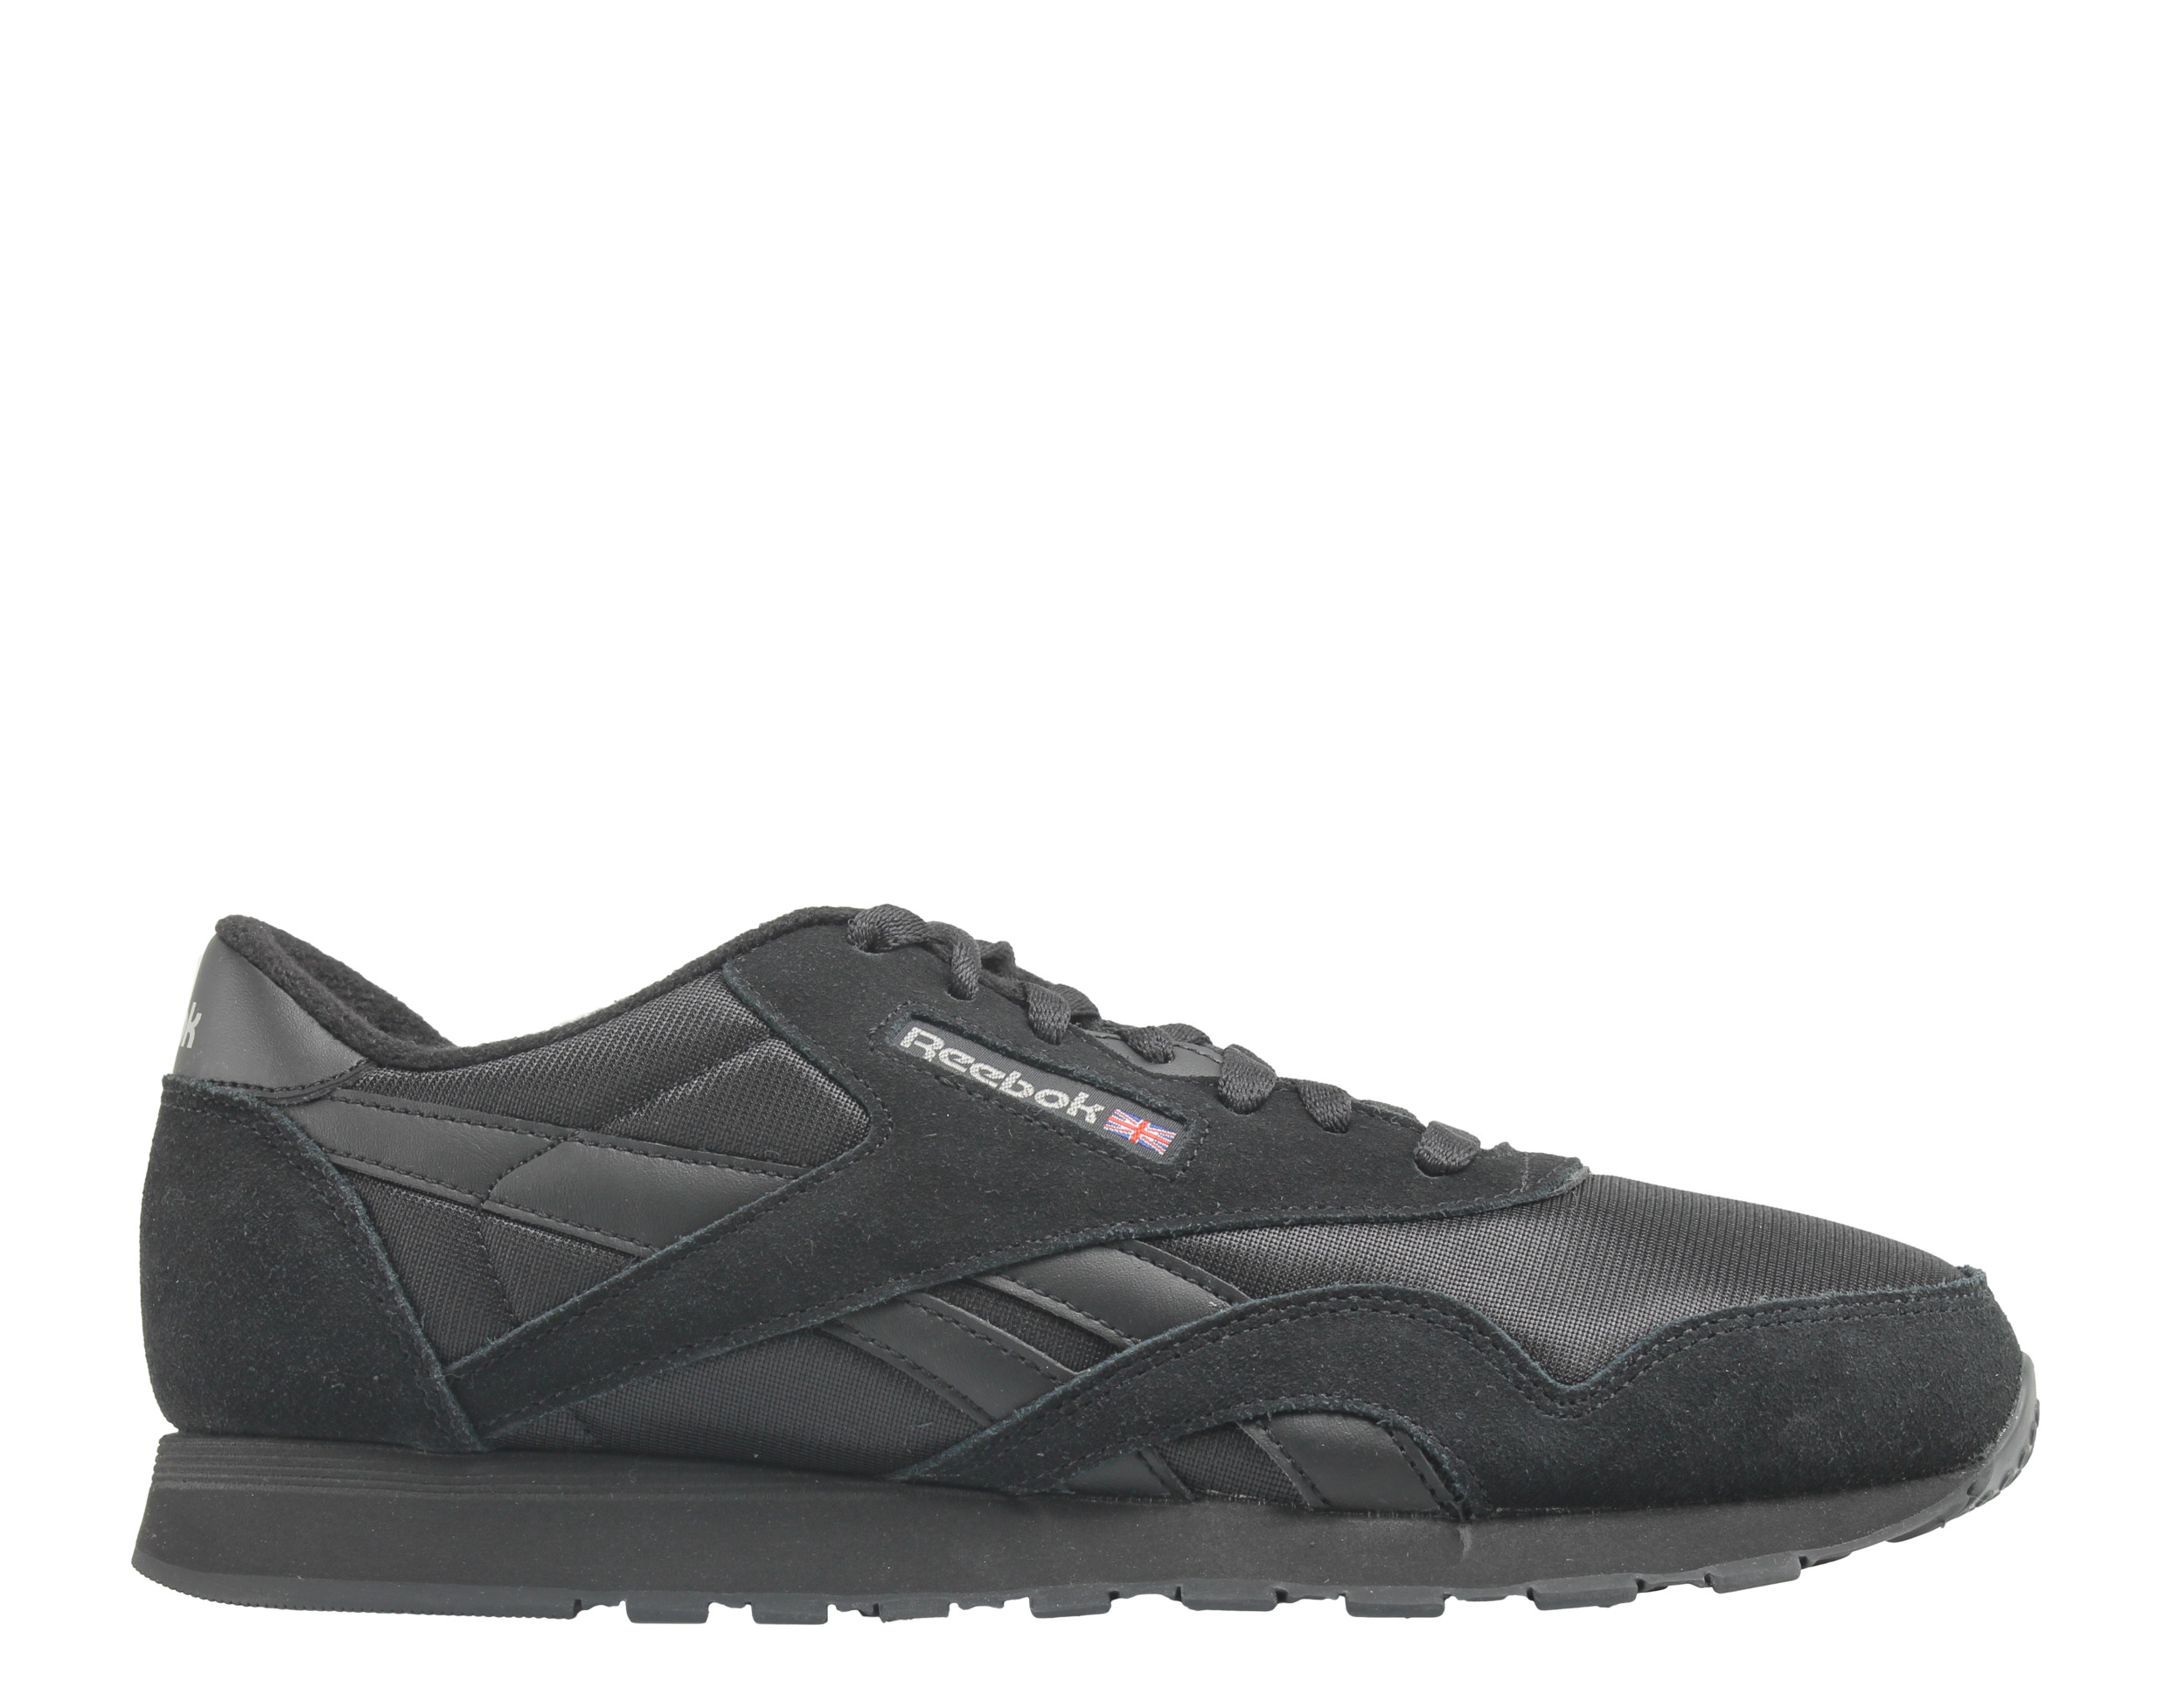 Reebok Classic Nylon Men's Running Shoes Size 11 - image 2 of 6